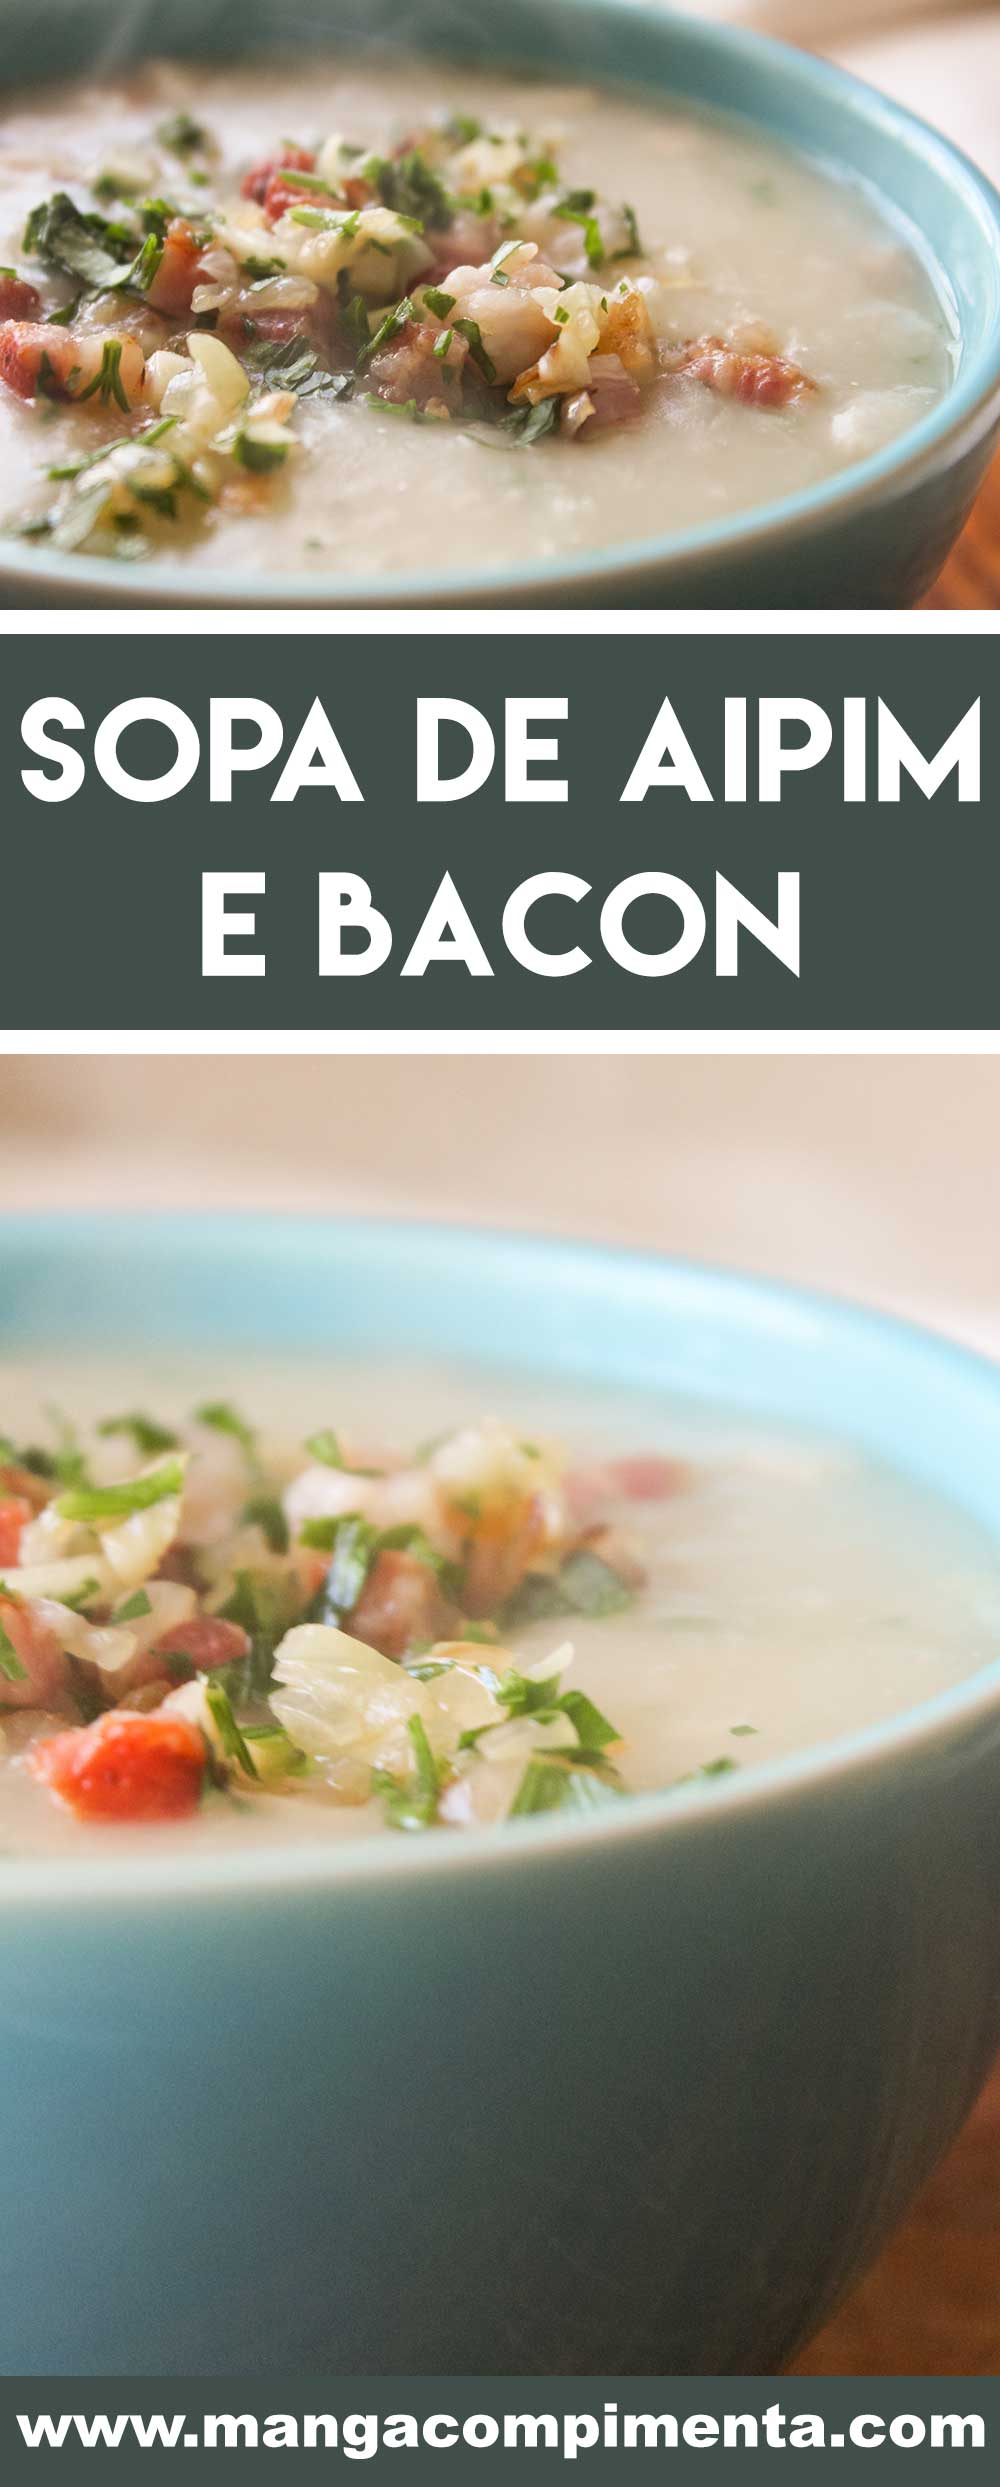 Receita de Sopa de Aipim e Bacon - prepare nos dias frios de inverno!